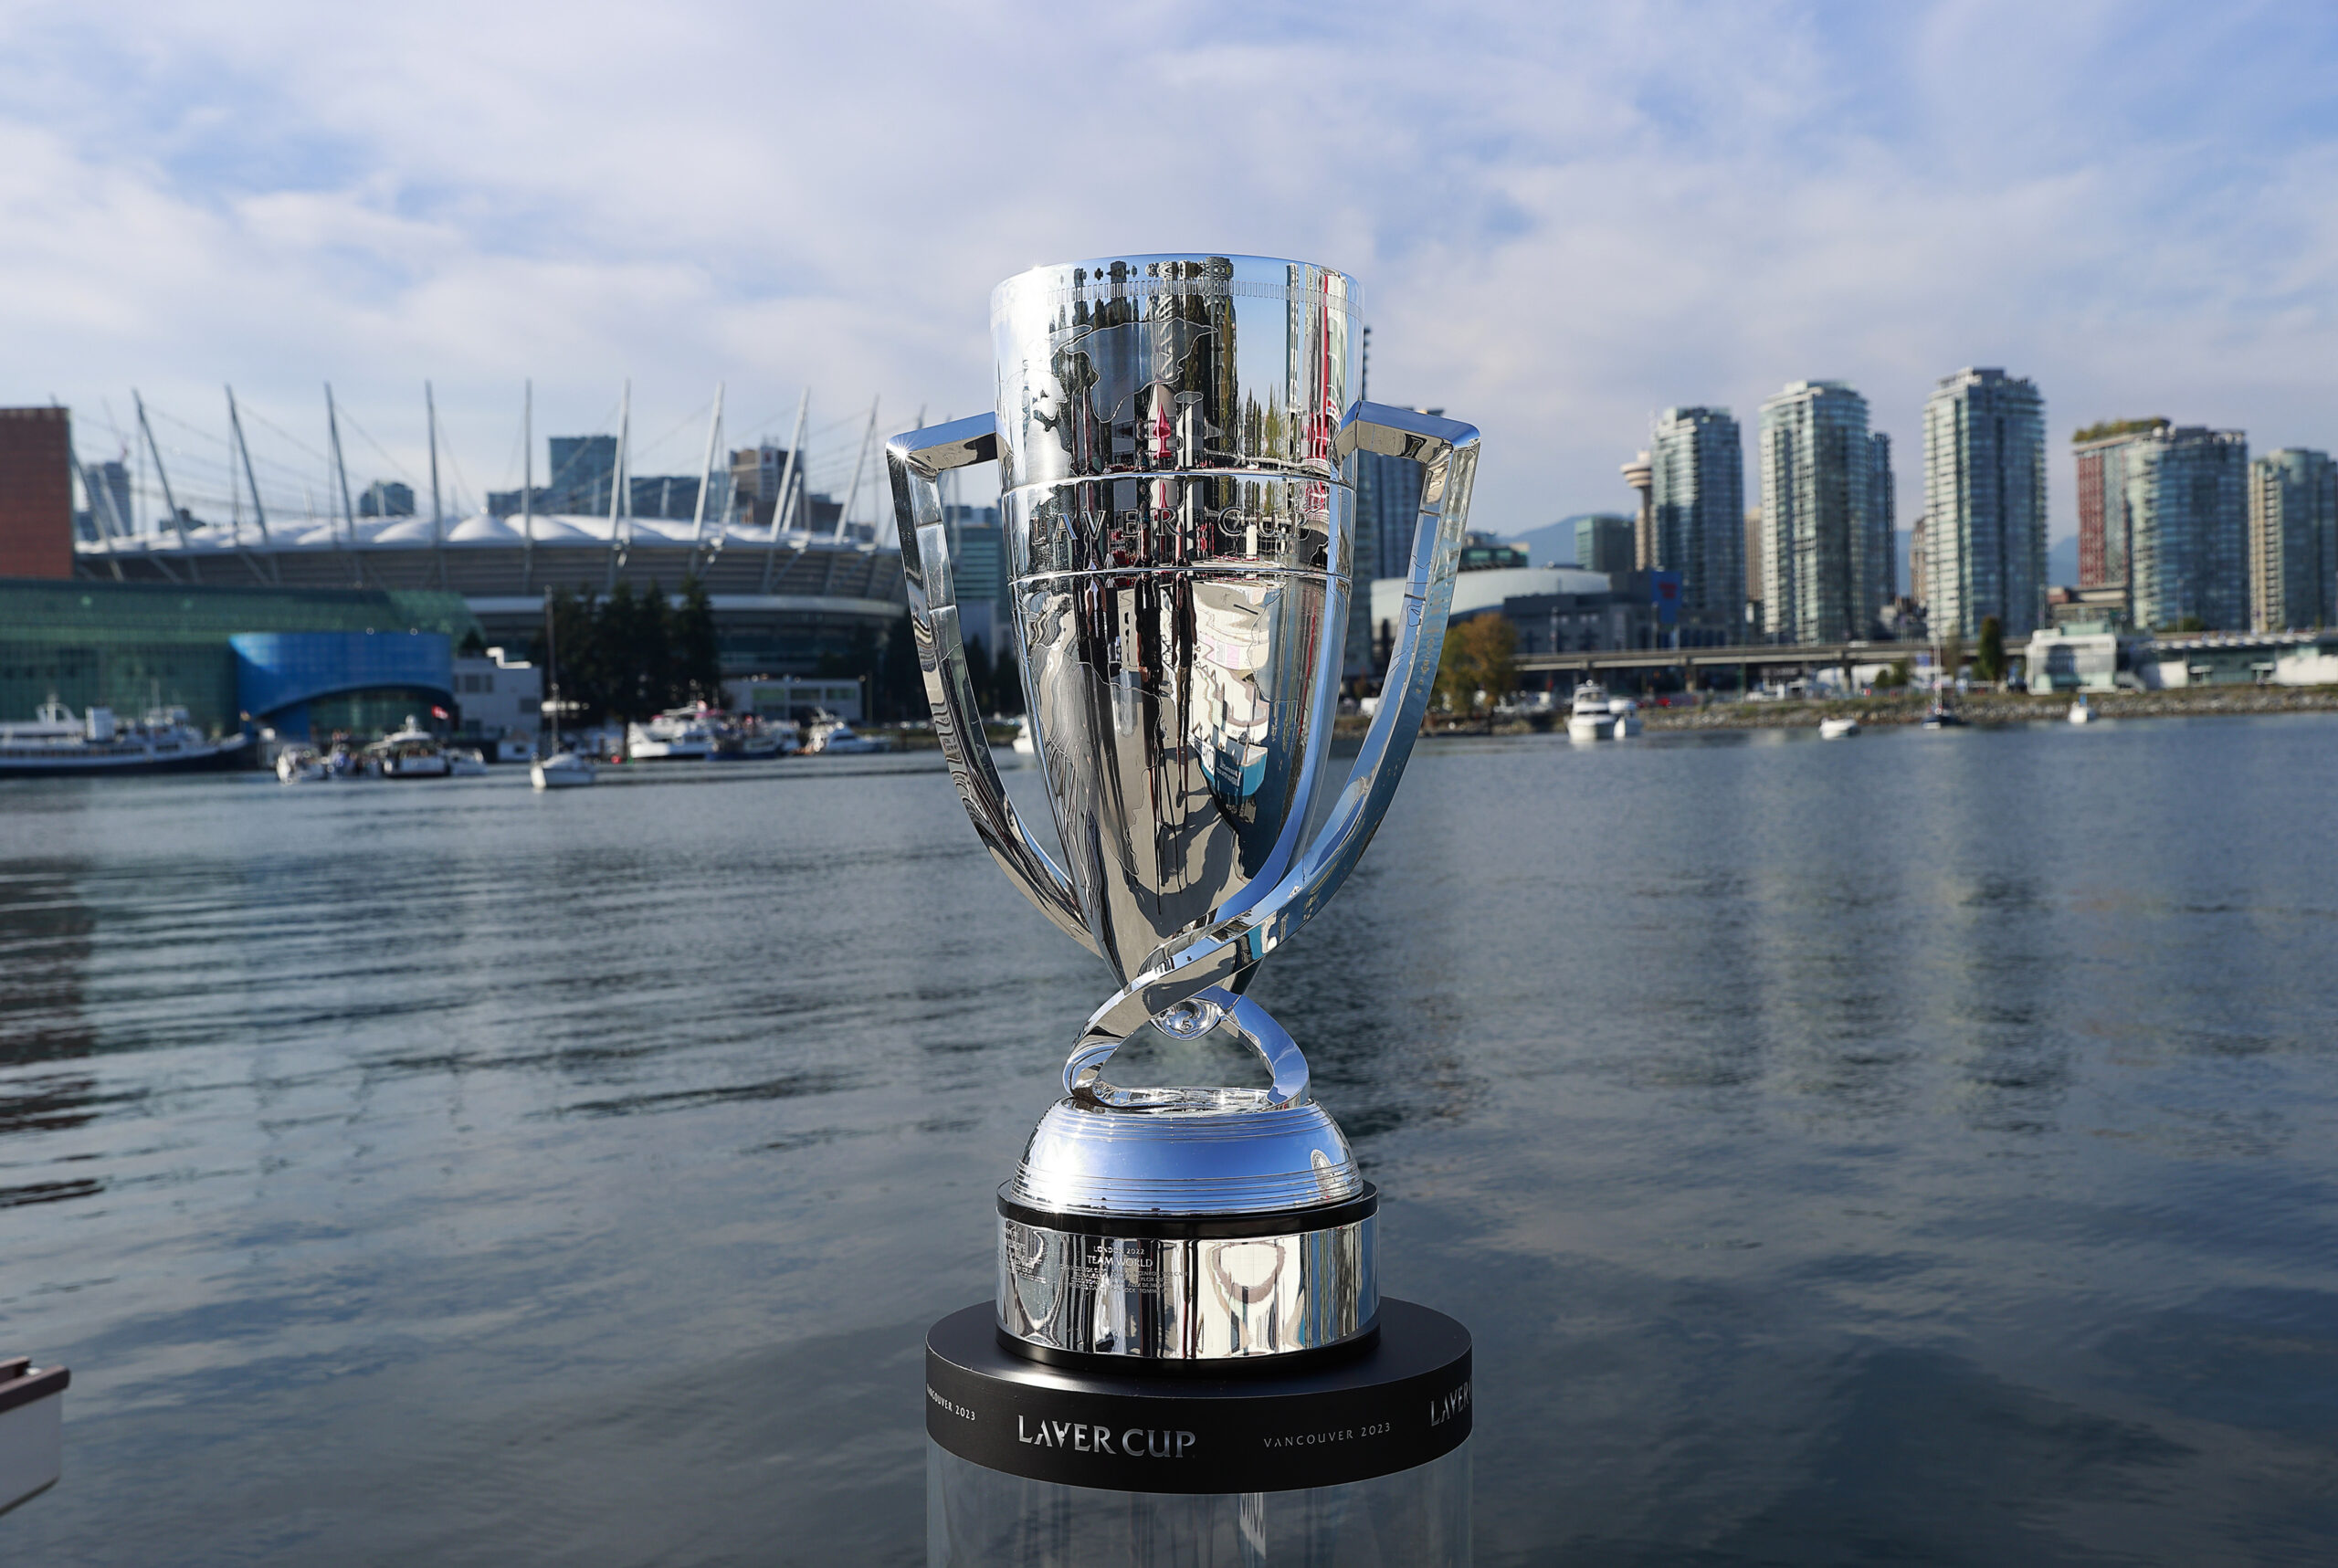 Laver Cup Teams Arrive In Vancouver Tennis TourTalk